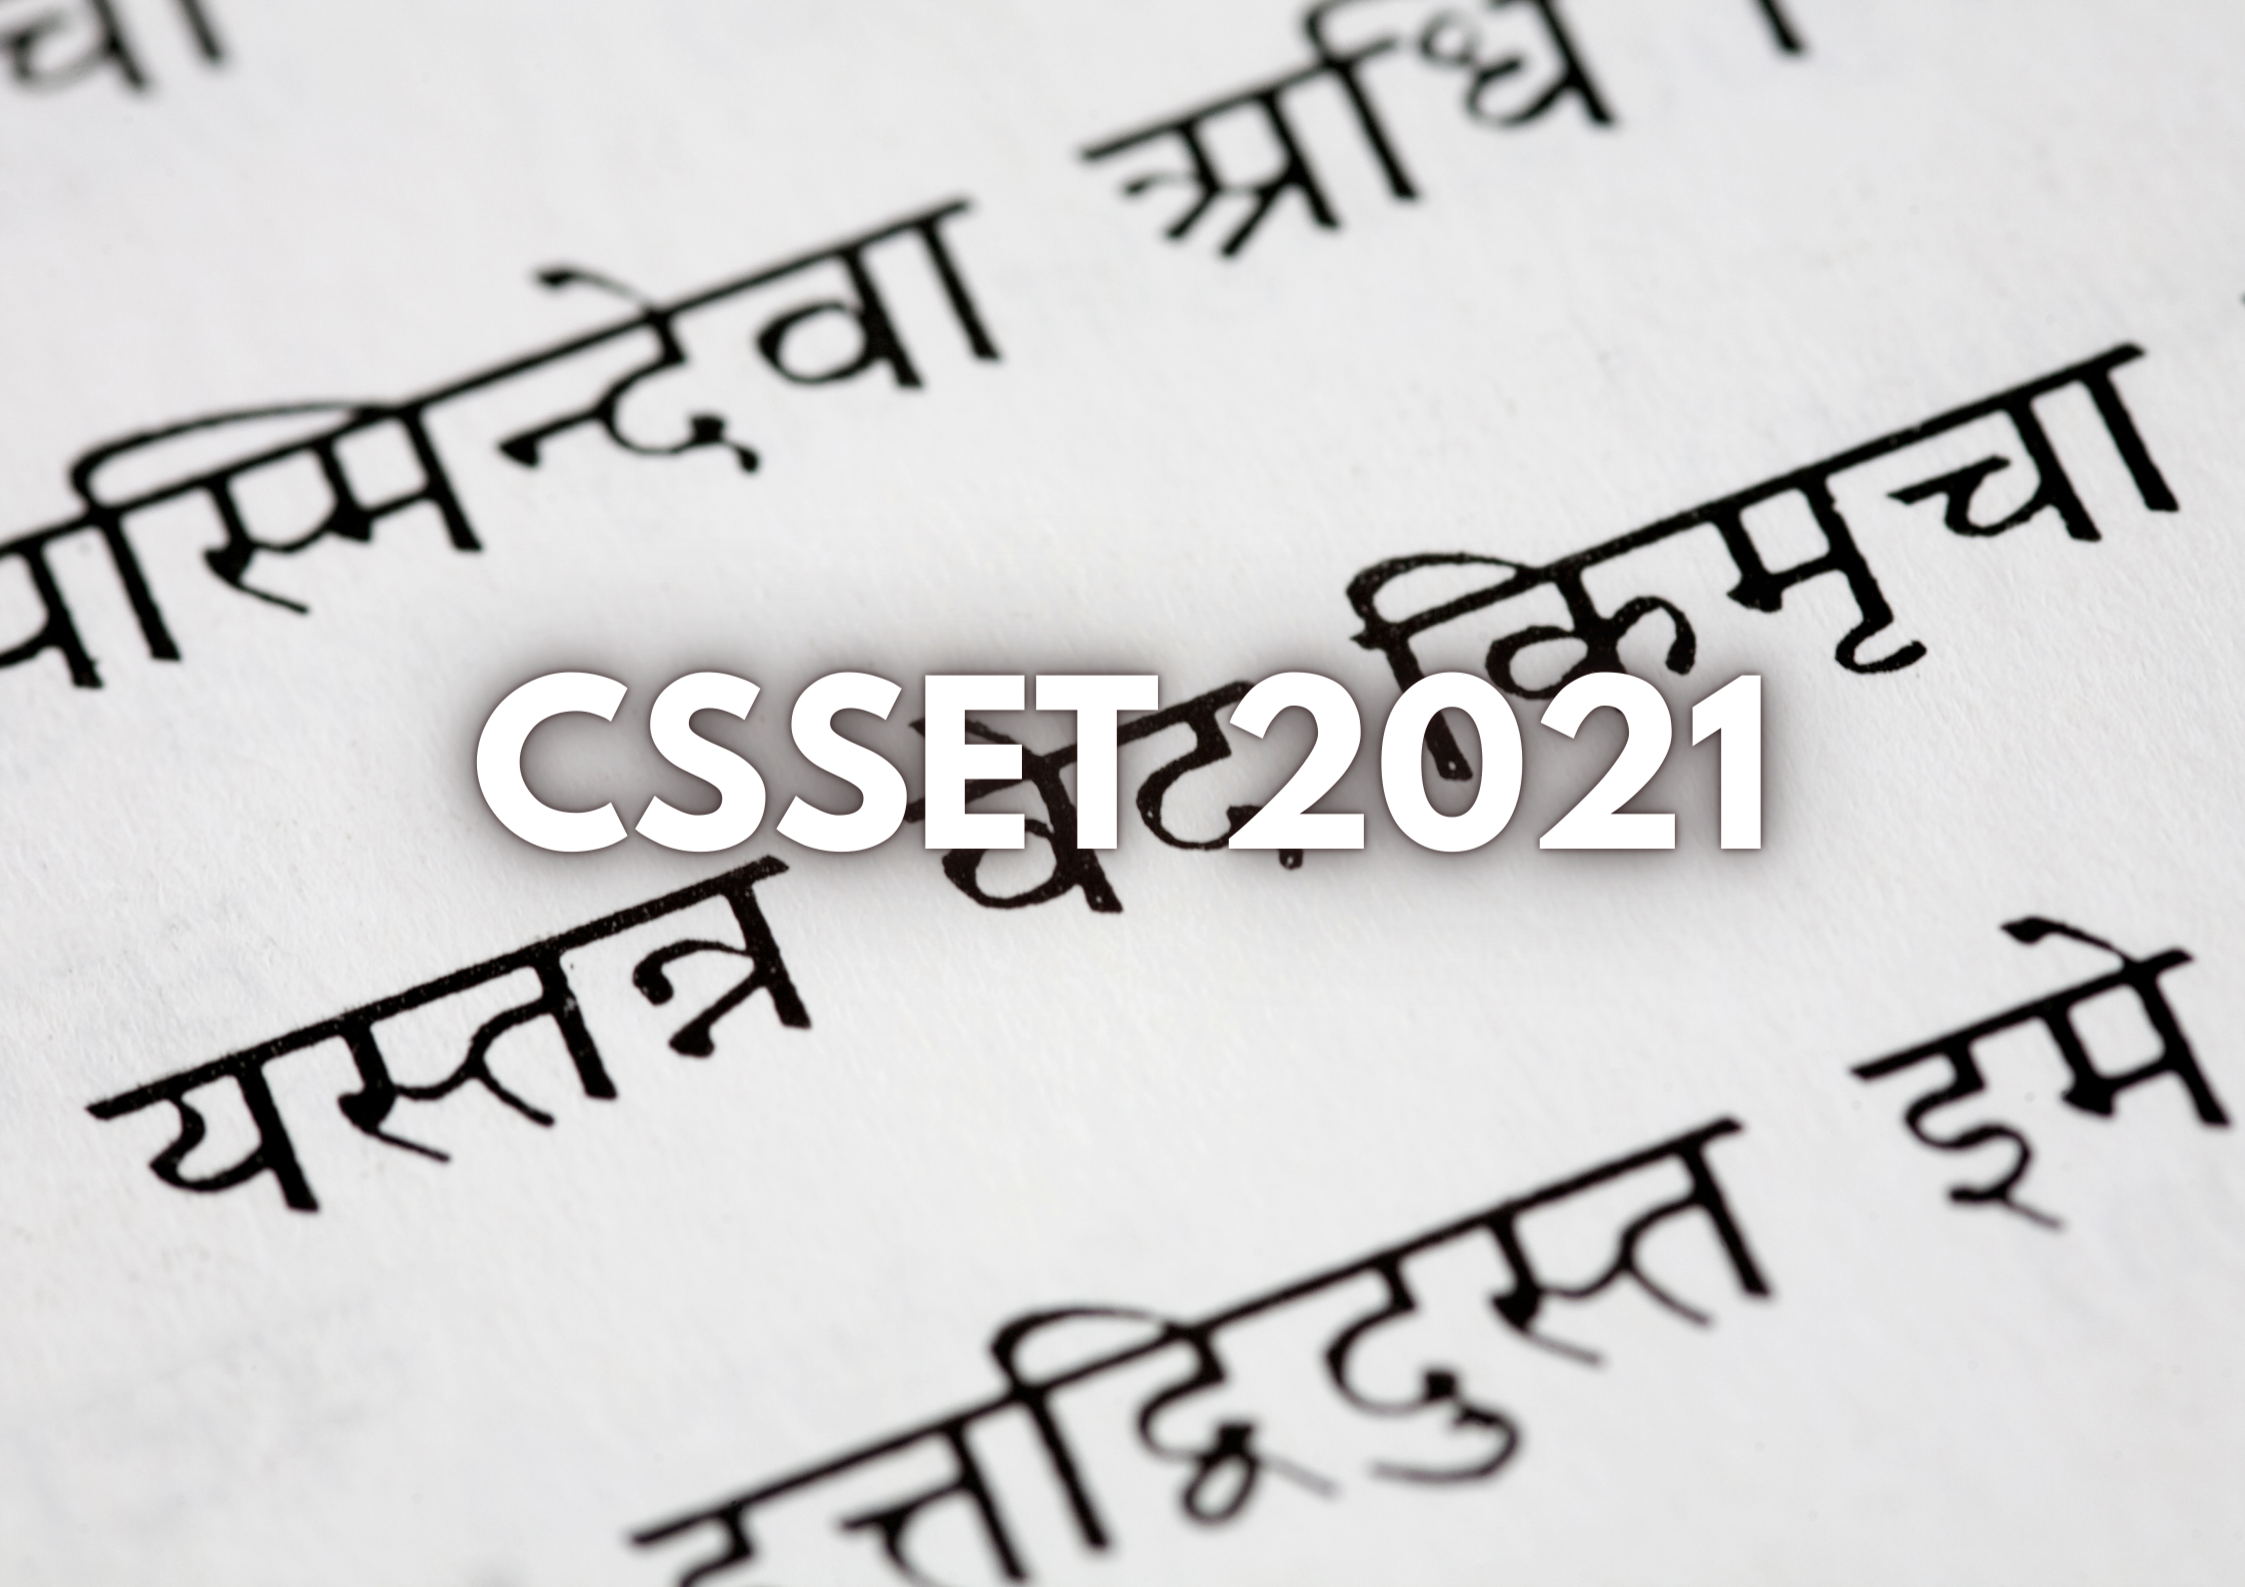 CSSET 2021 Notification: Registration, Dates(Tentative), Admit Card, Pattern and Syllabus